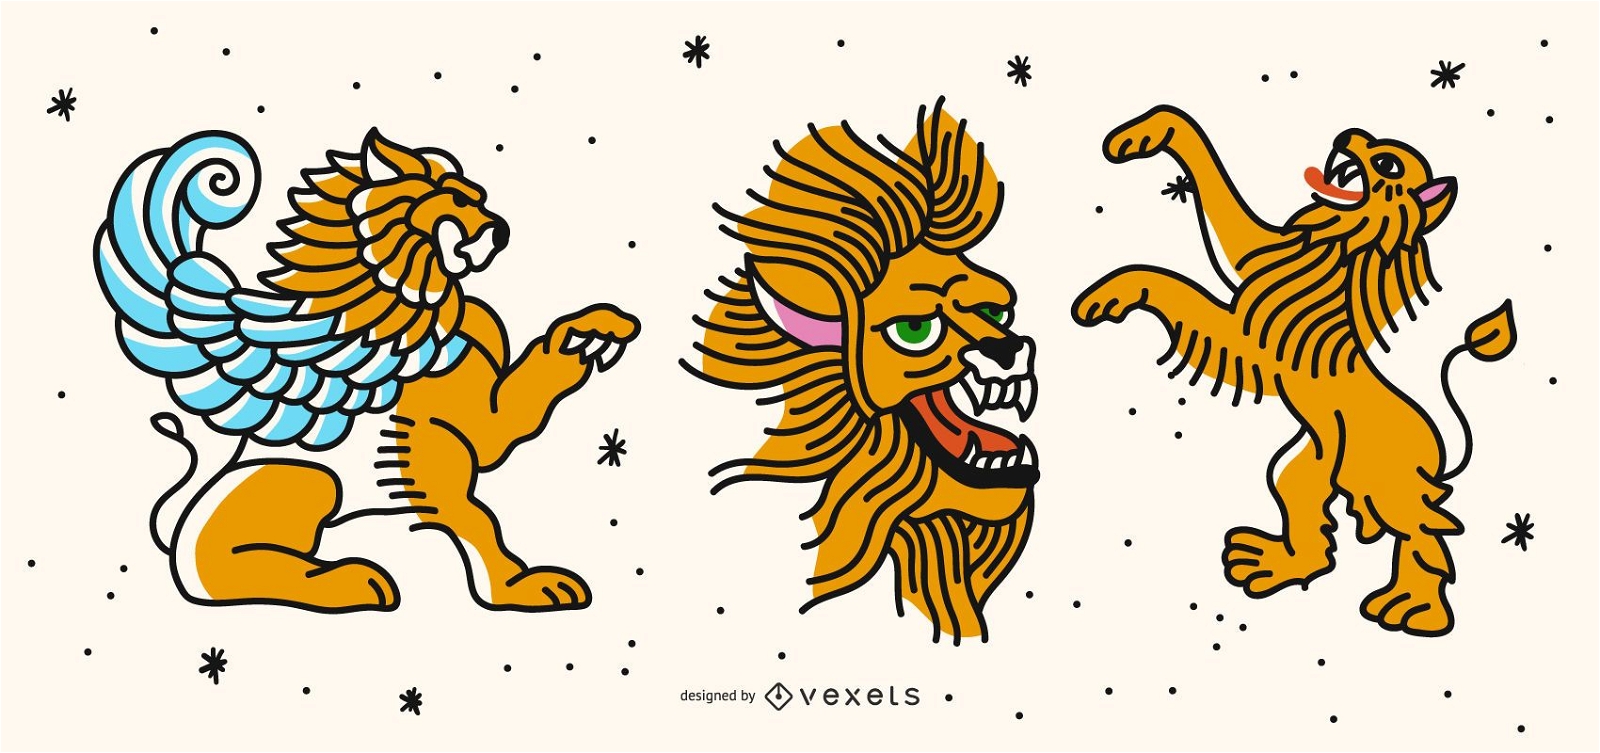 Colored lion tattoo set